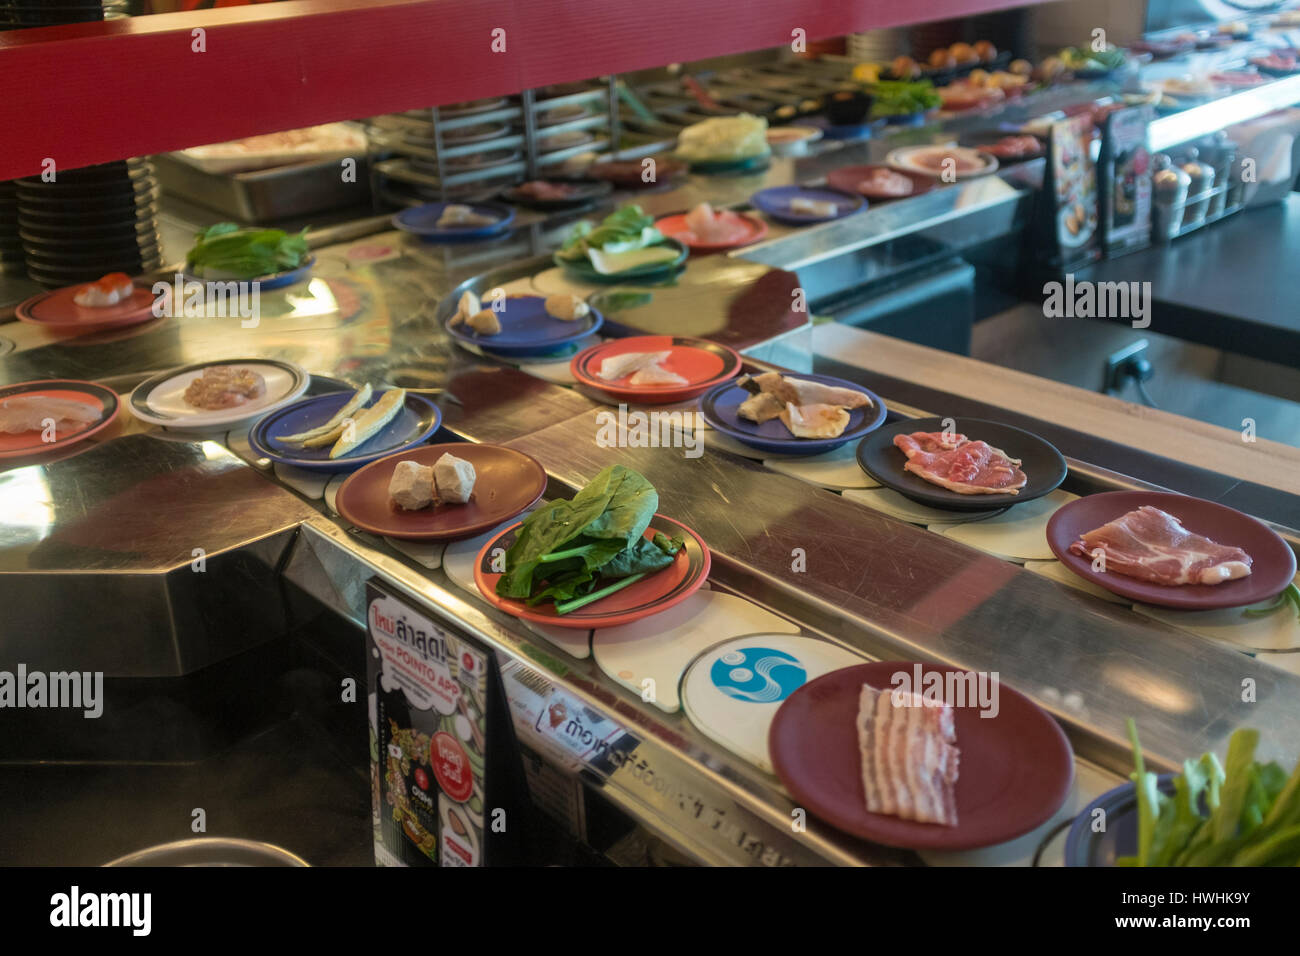 Conveyor belt sushi immagini e fotografie stock ad alta risoluzione - Alamy